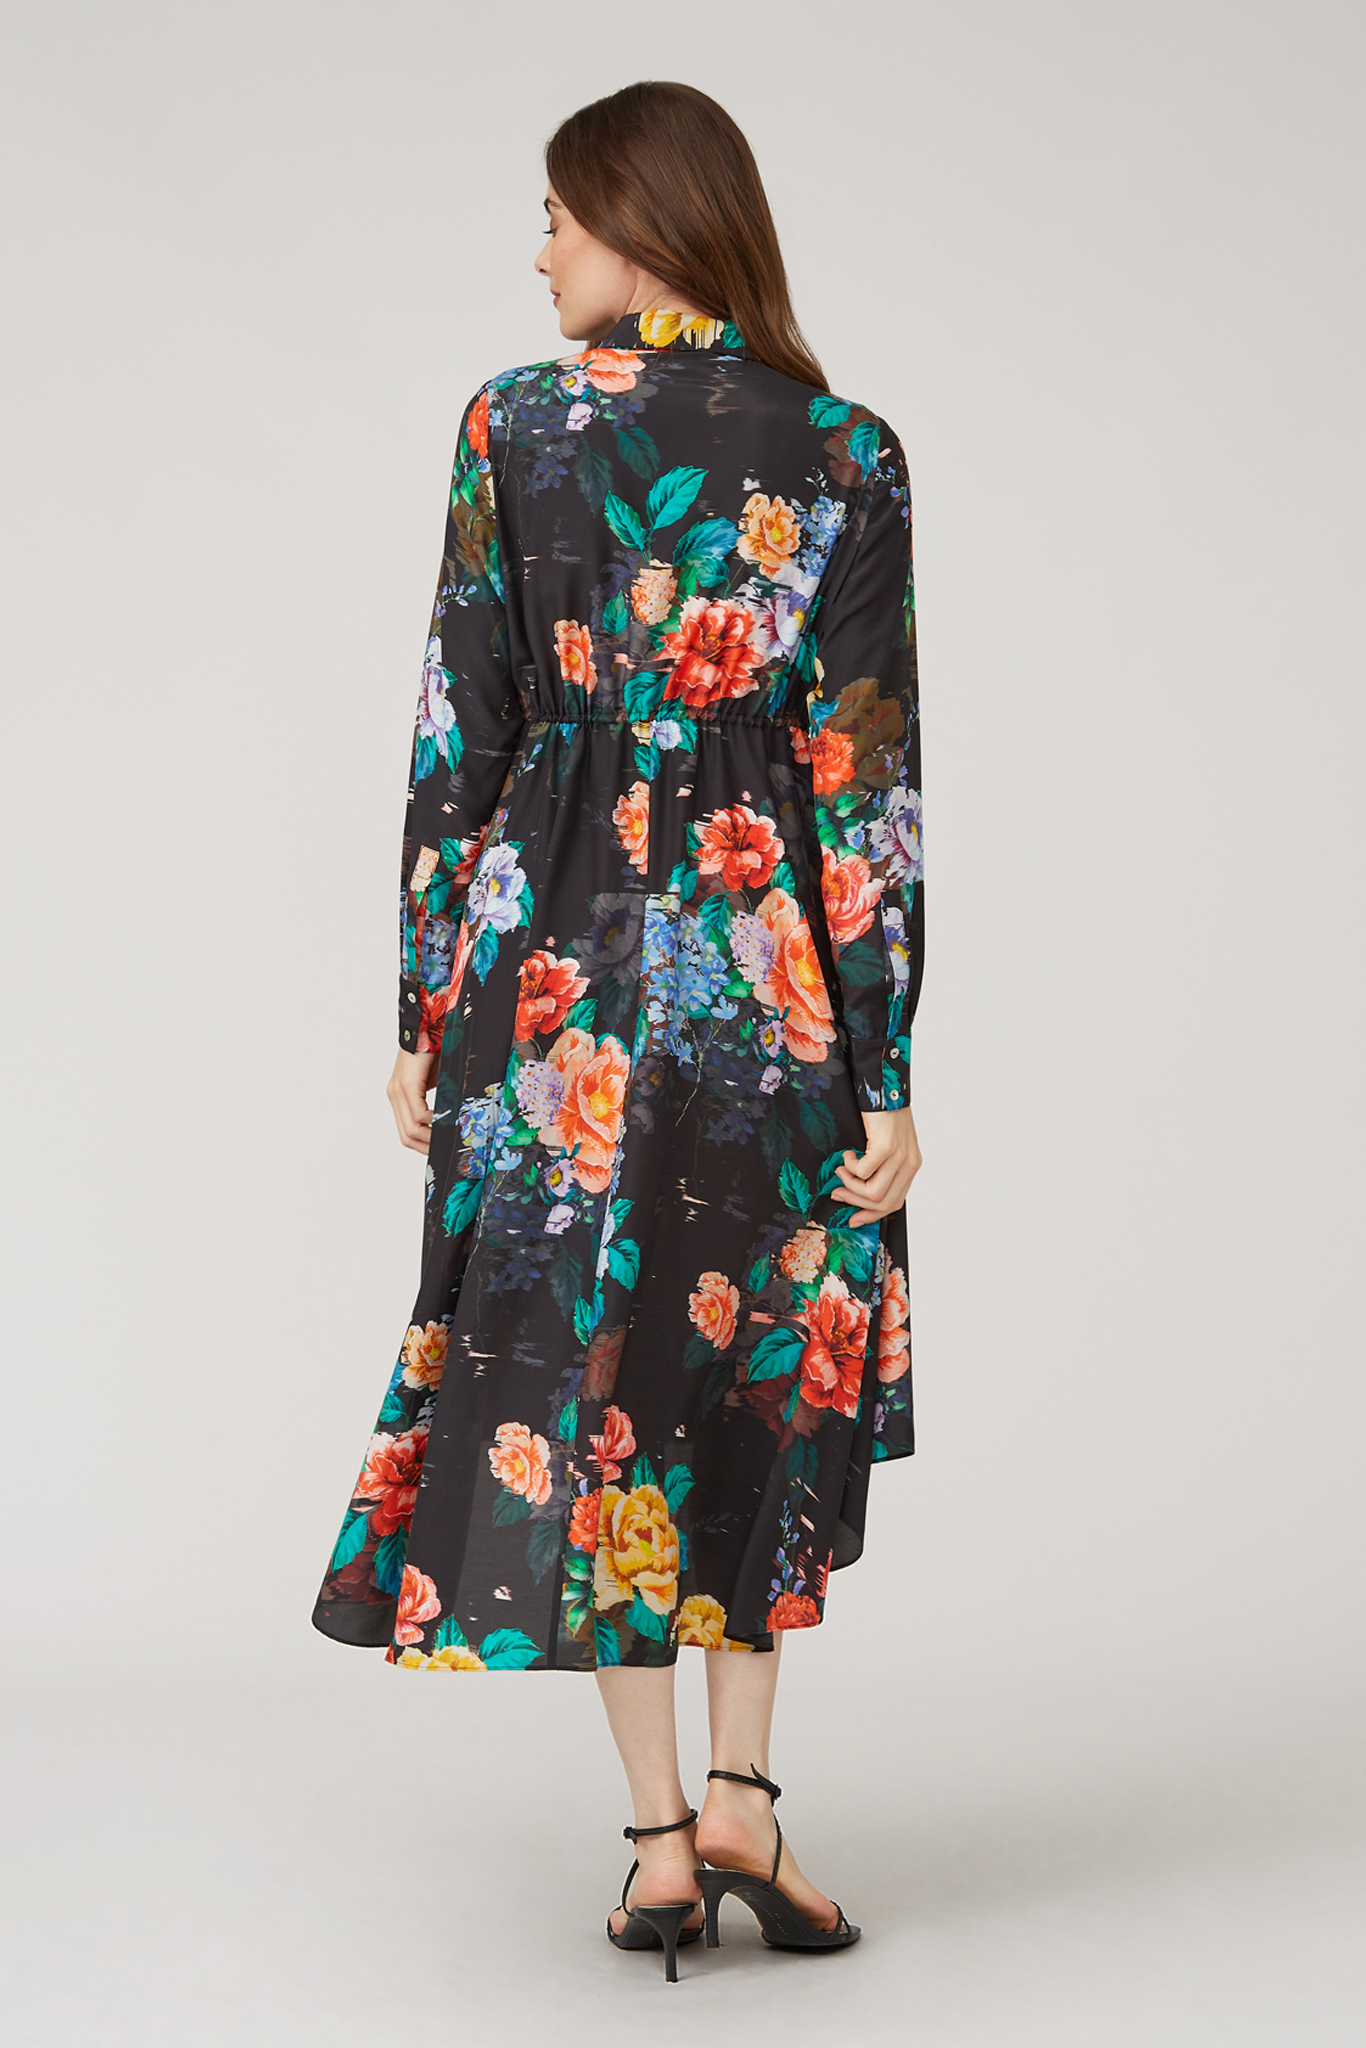 Shia Vintage Floral Shirt Dress - Ethereal London